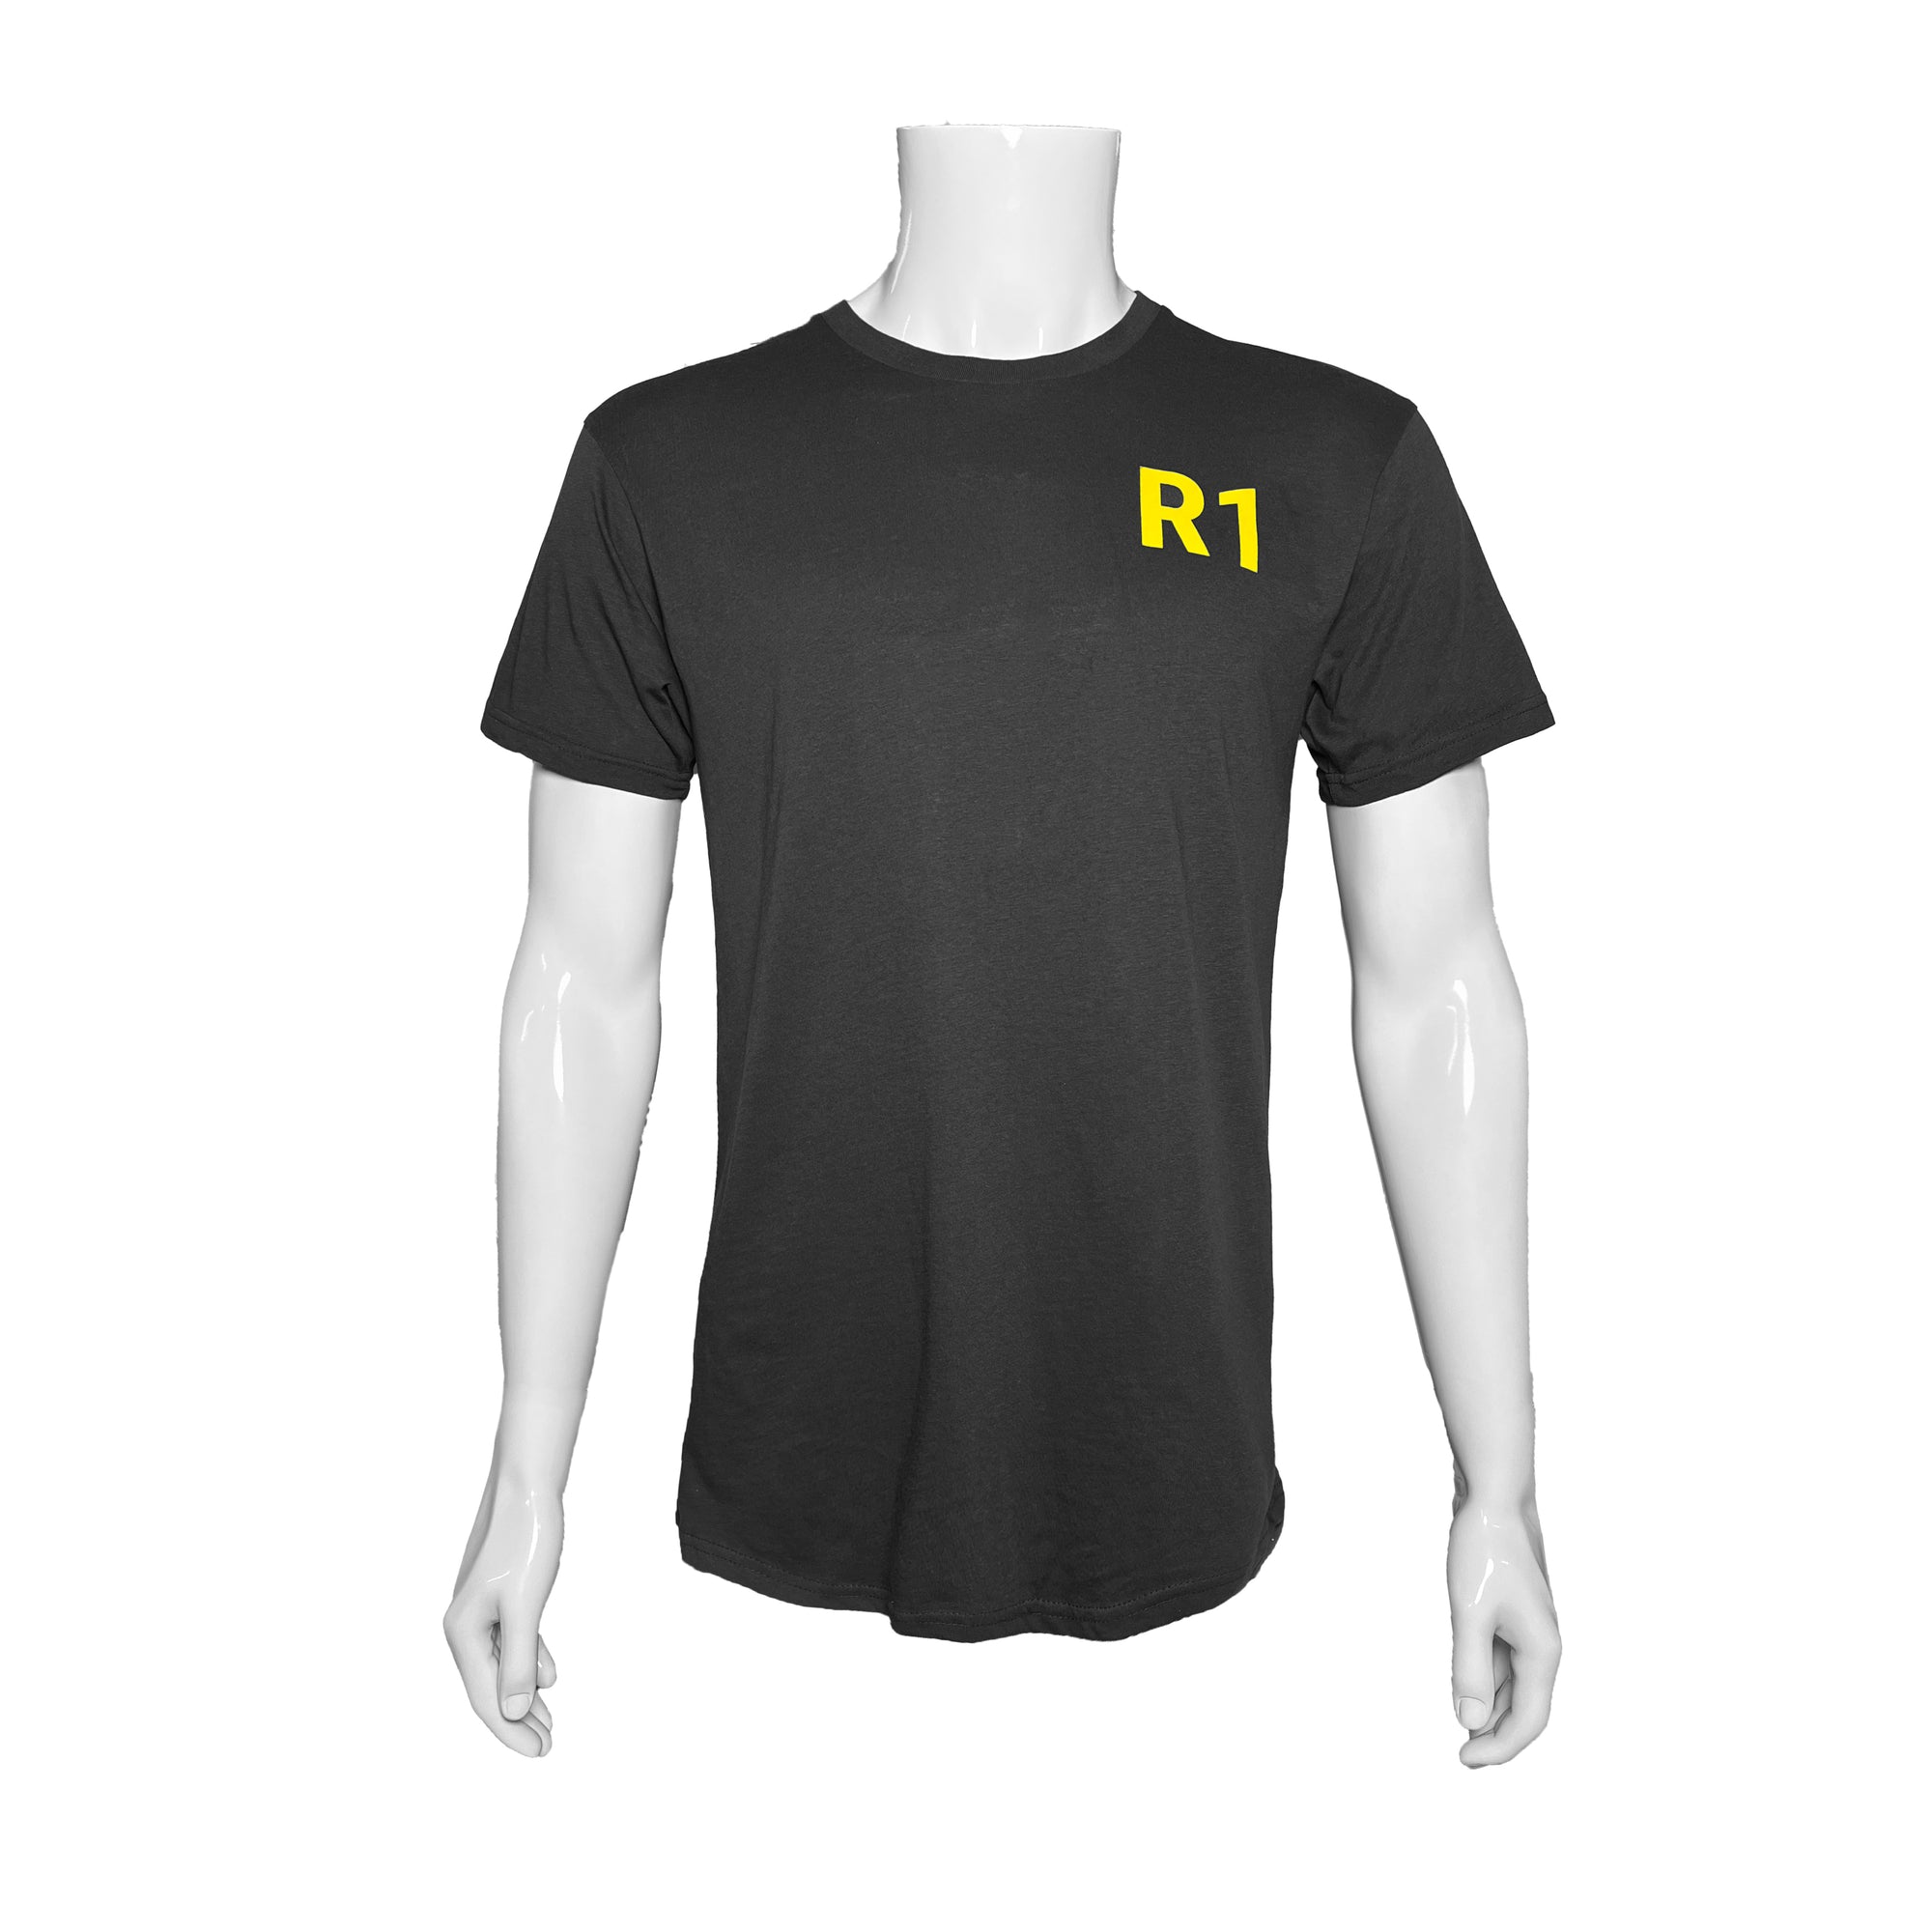 Retired "R1" Shirt